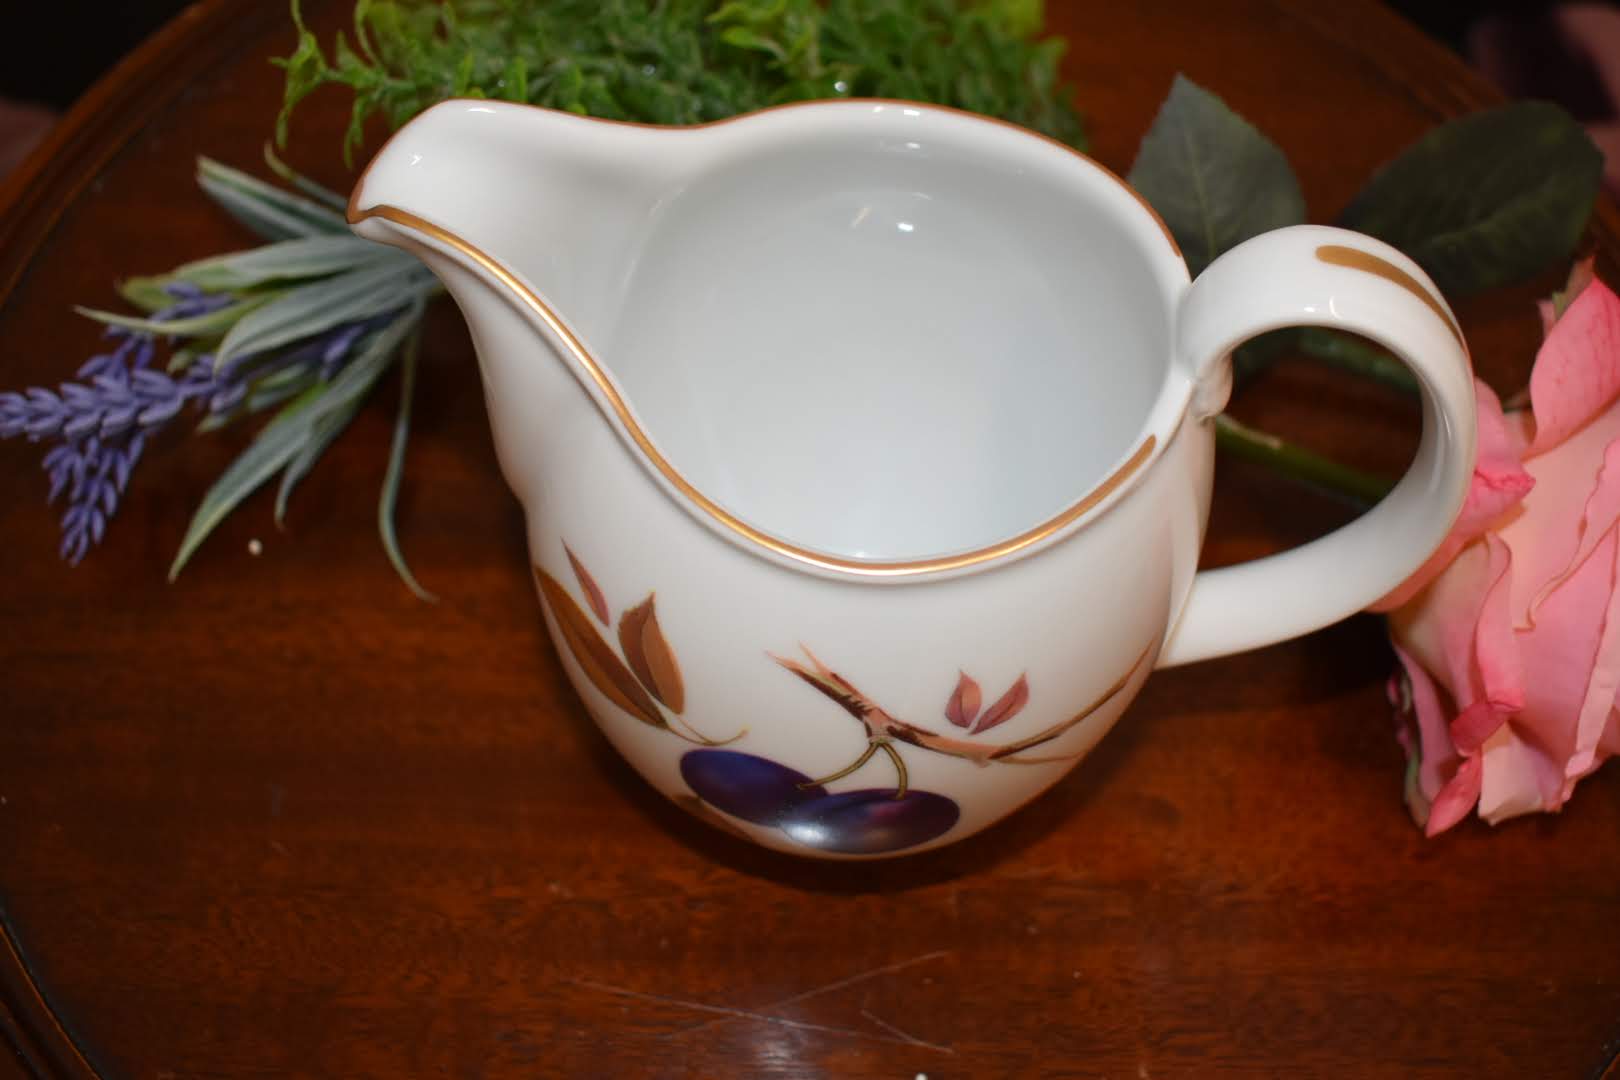 Royal Worchester Evesham Original Porcelain Fine China - Gravy Bowl, Big Creamer - Gold Trim - From England